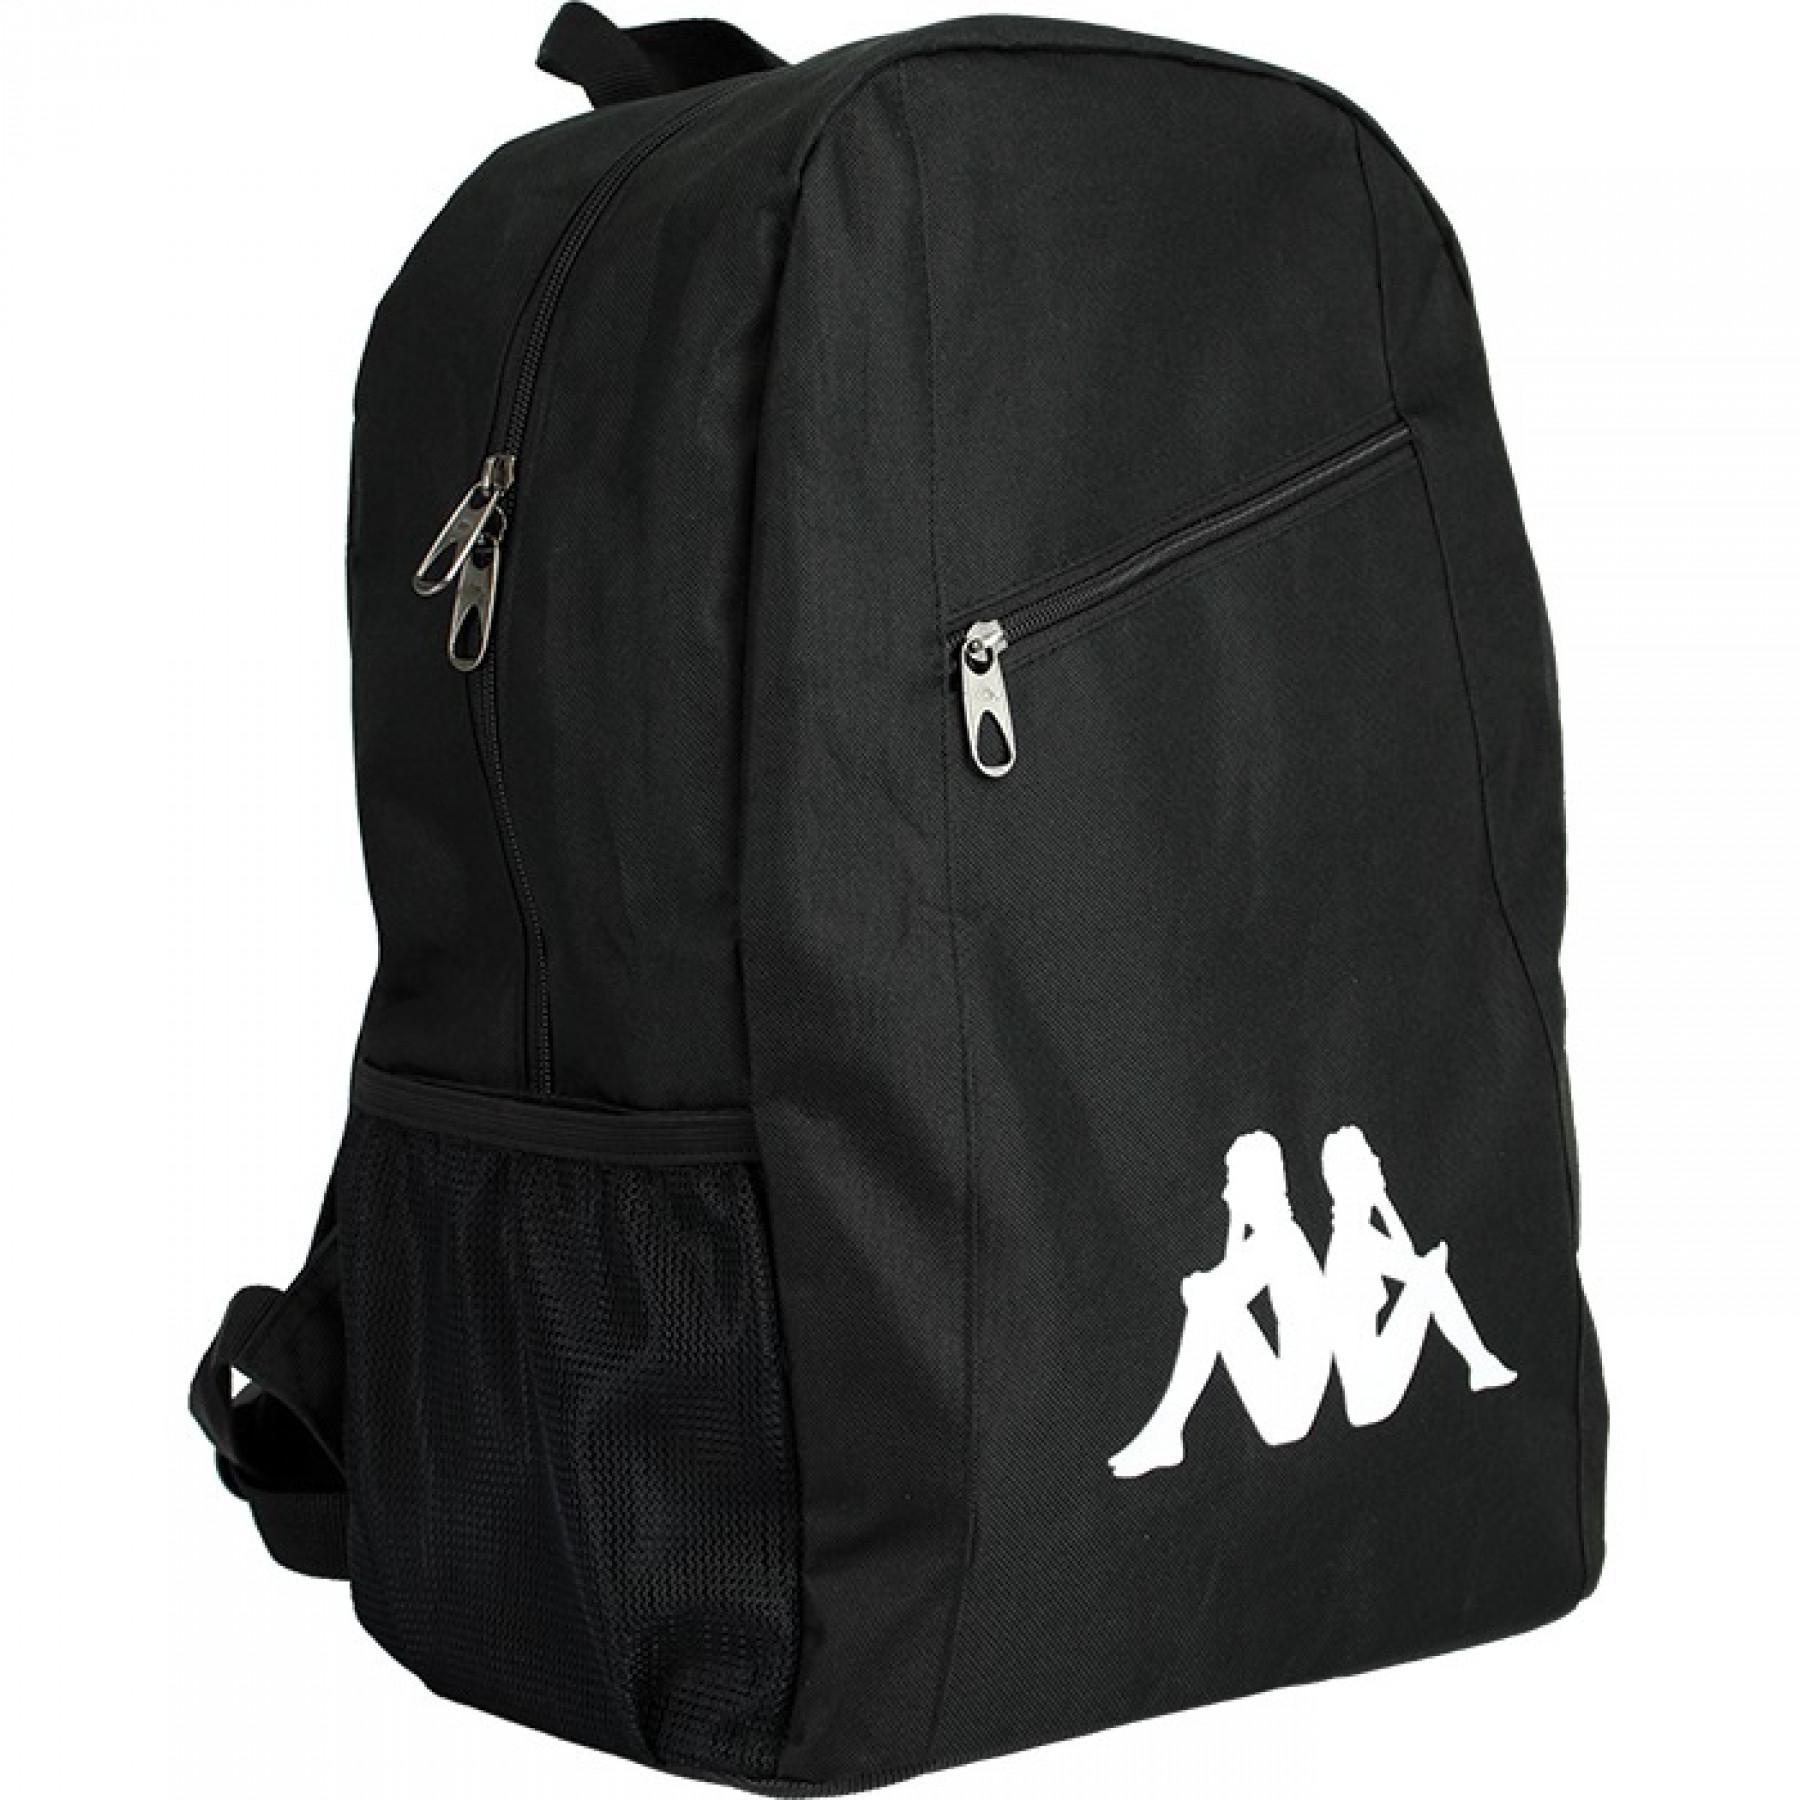 Backpack Velia - Backpacks - Bags - Equipment